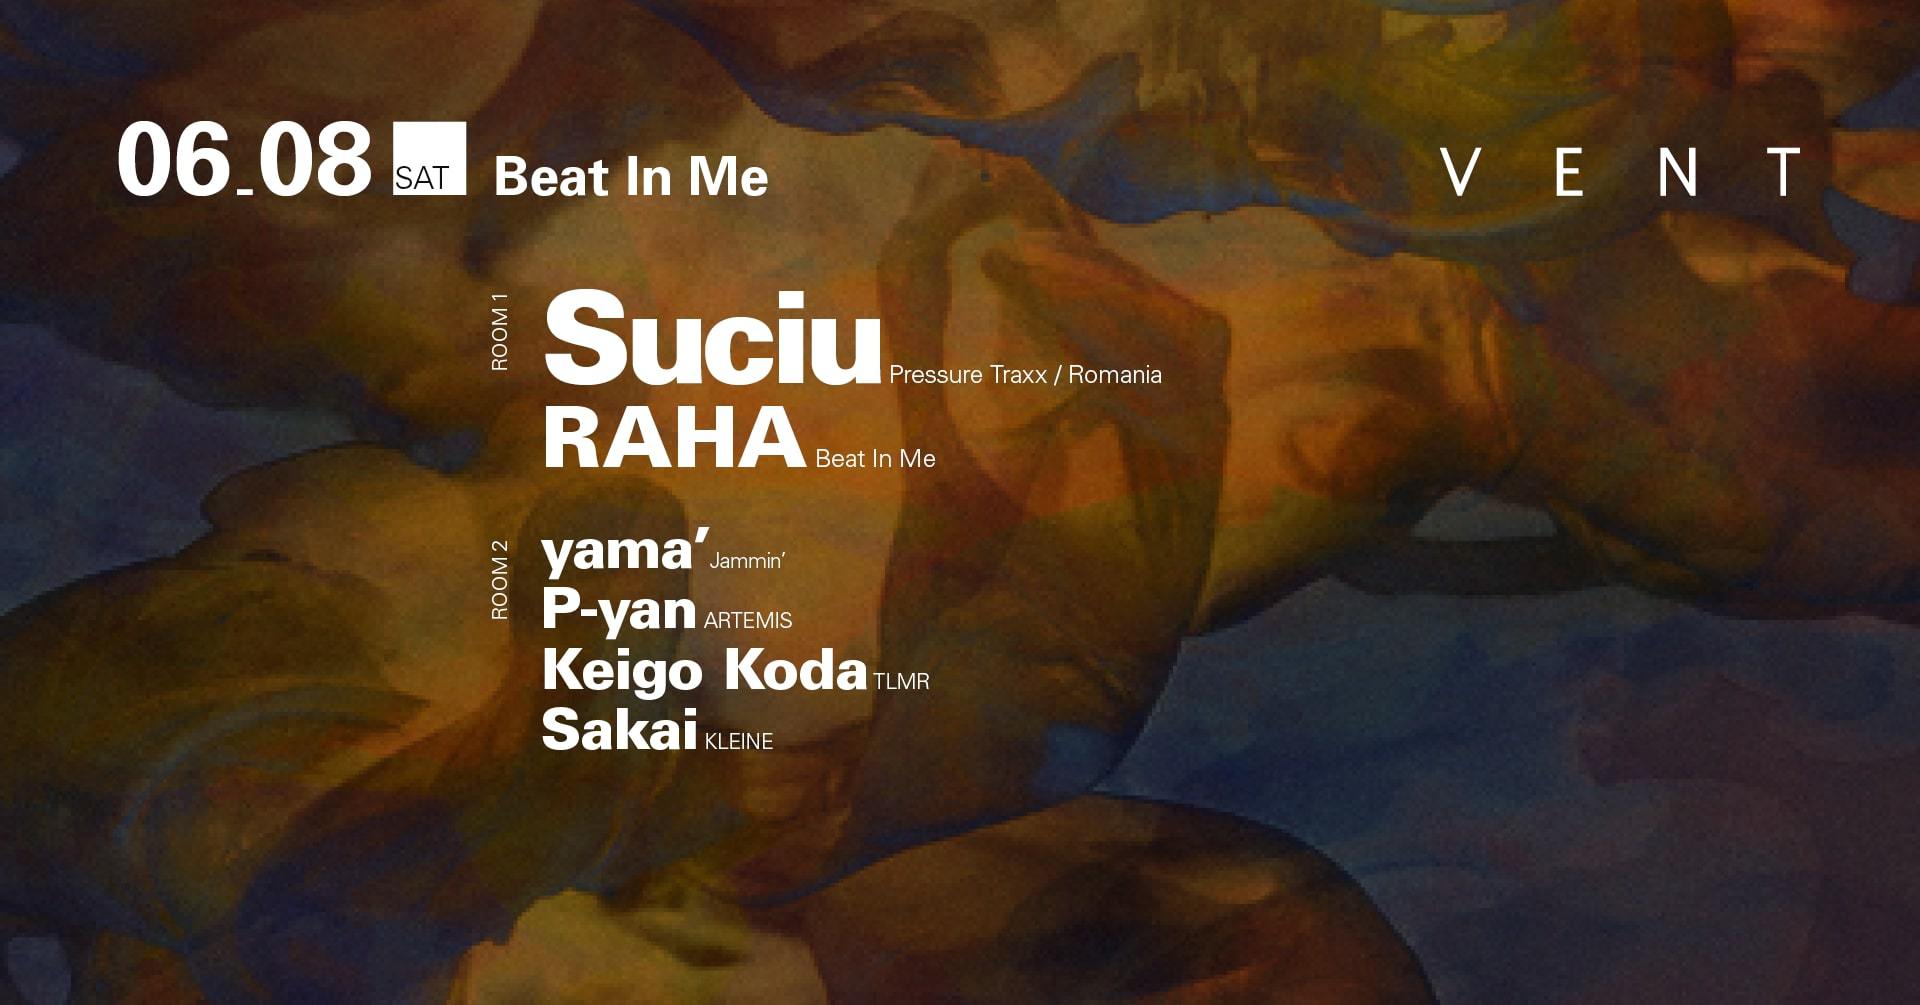 Suciu will be at “Beat In Me” nightclub VENT Omotesando